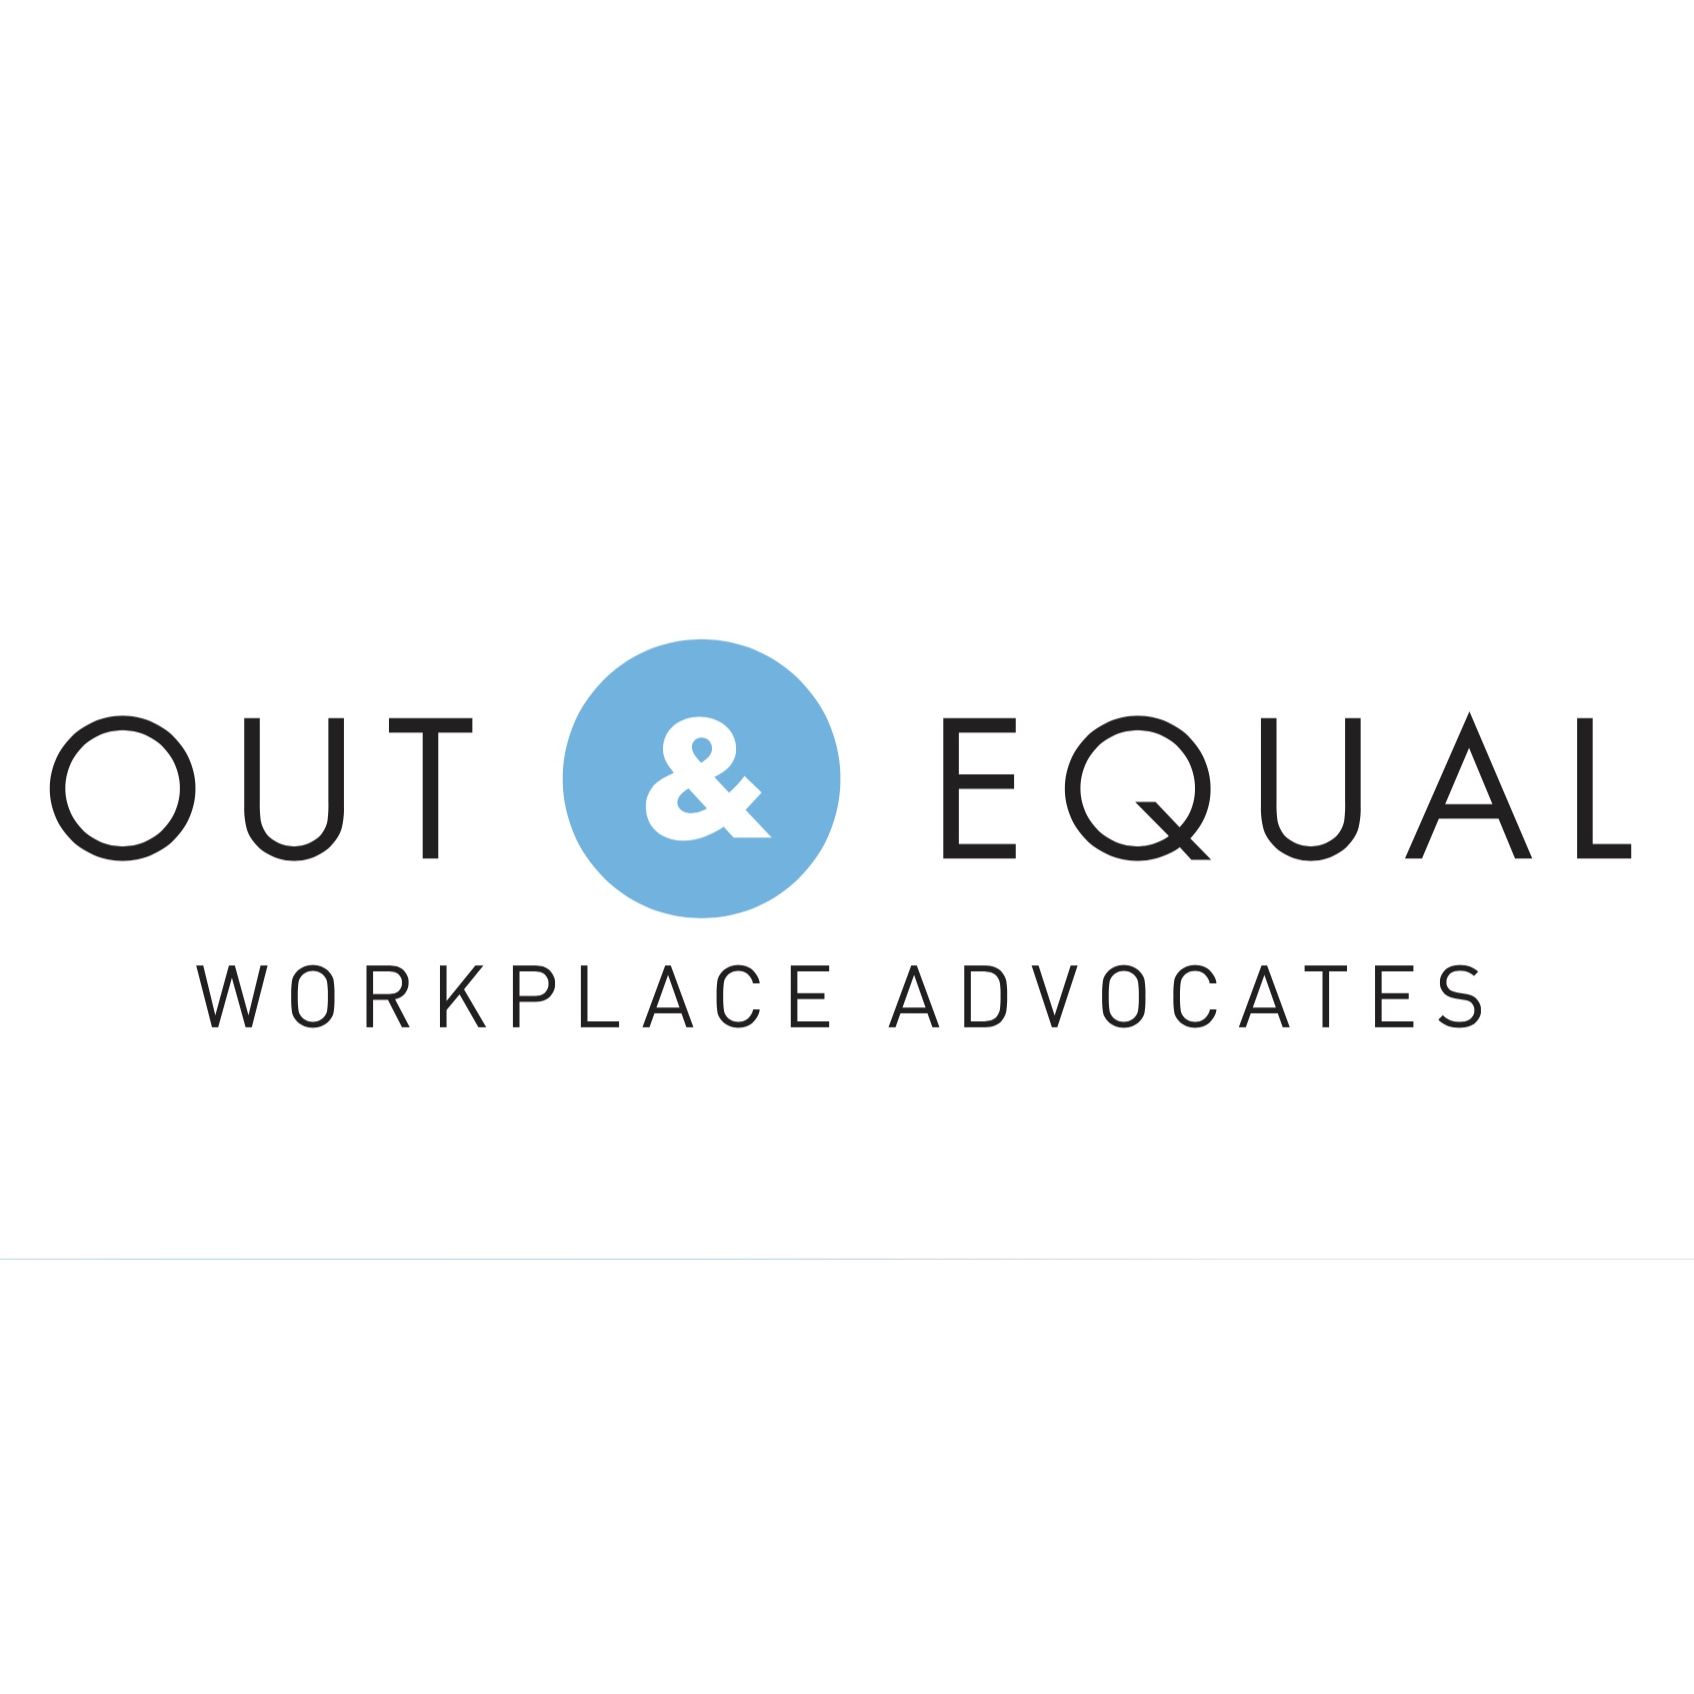 LGBTQ Organizations Near Me - Out & Equal